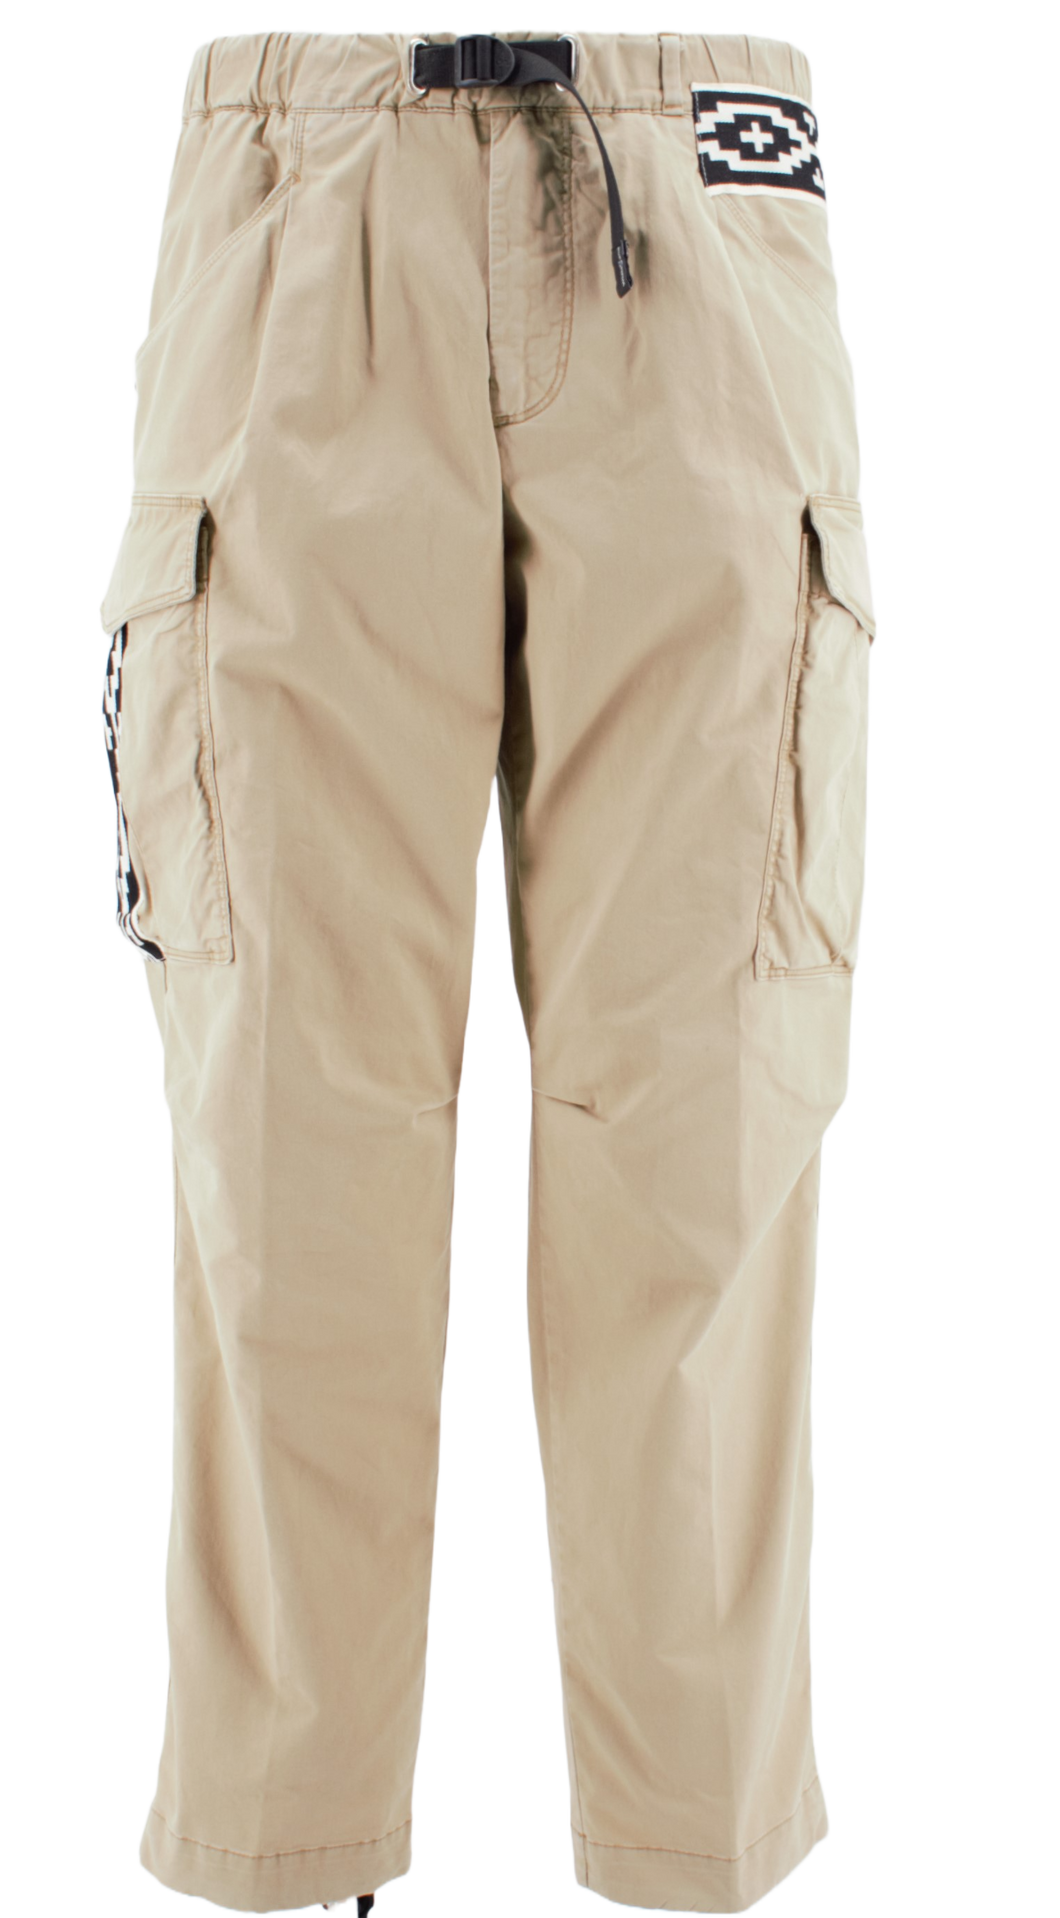 Pantalone Cargo SU69 70-FE02 White Sand